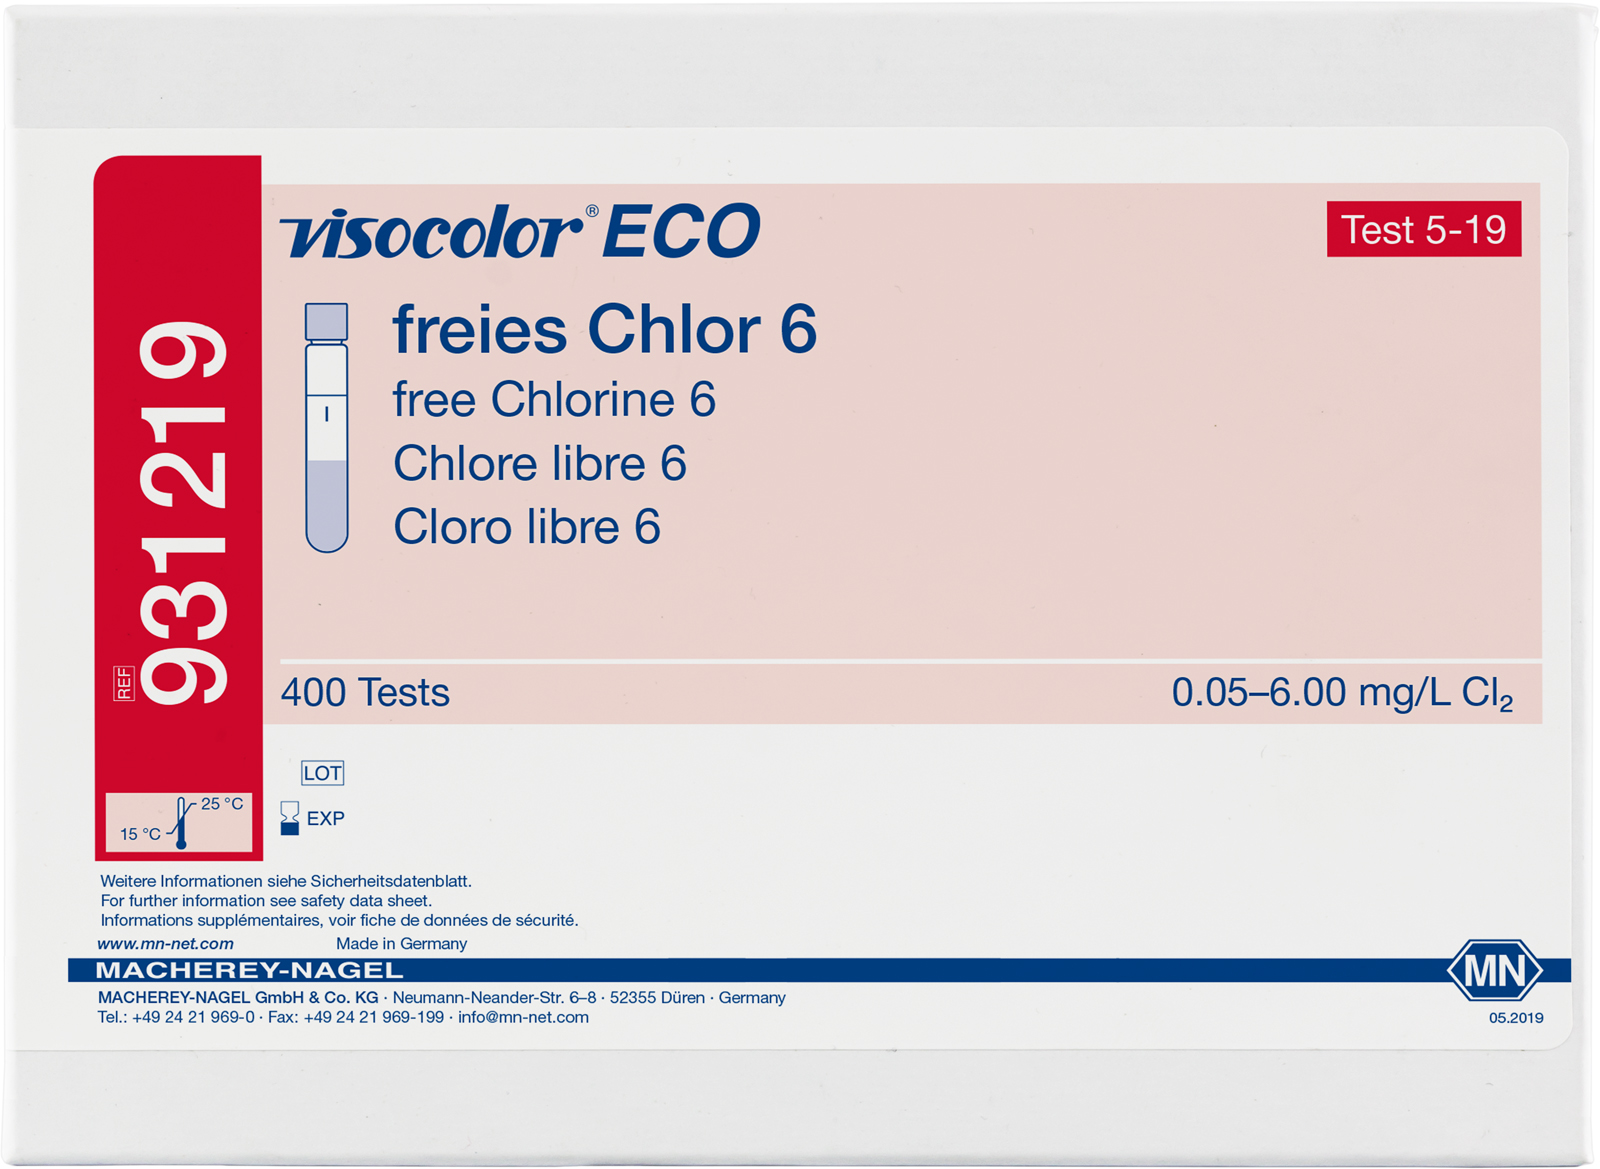 VISOCOLOR® ECO freies Chlor 6